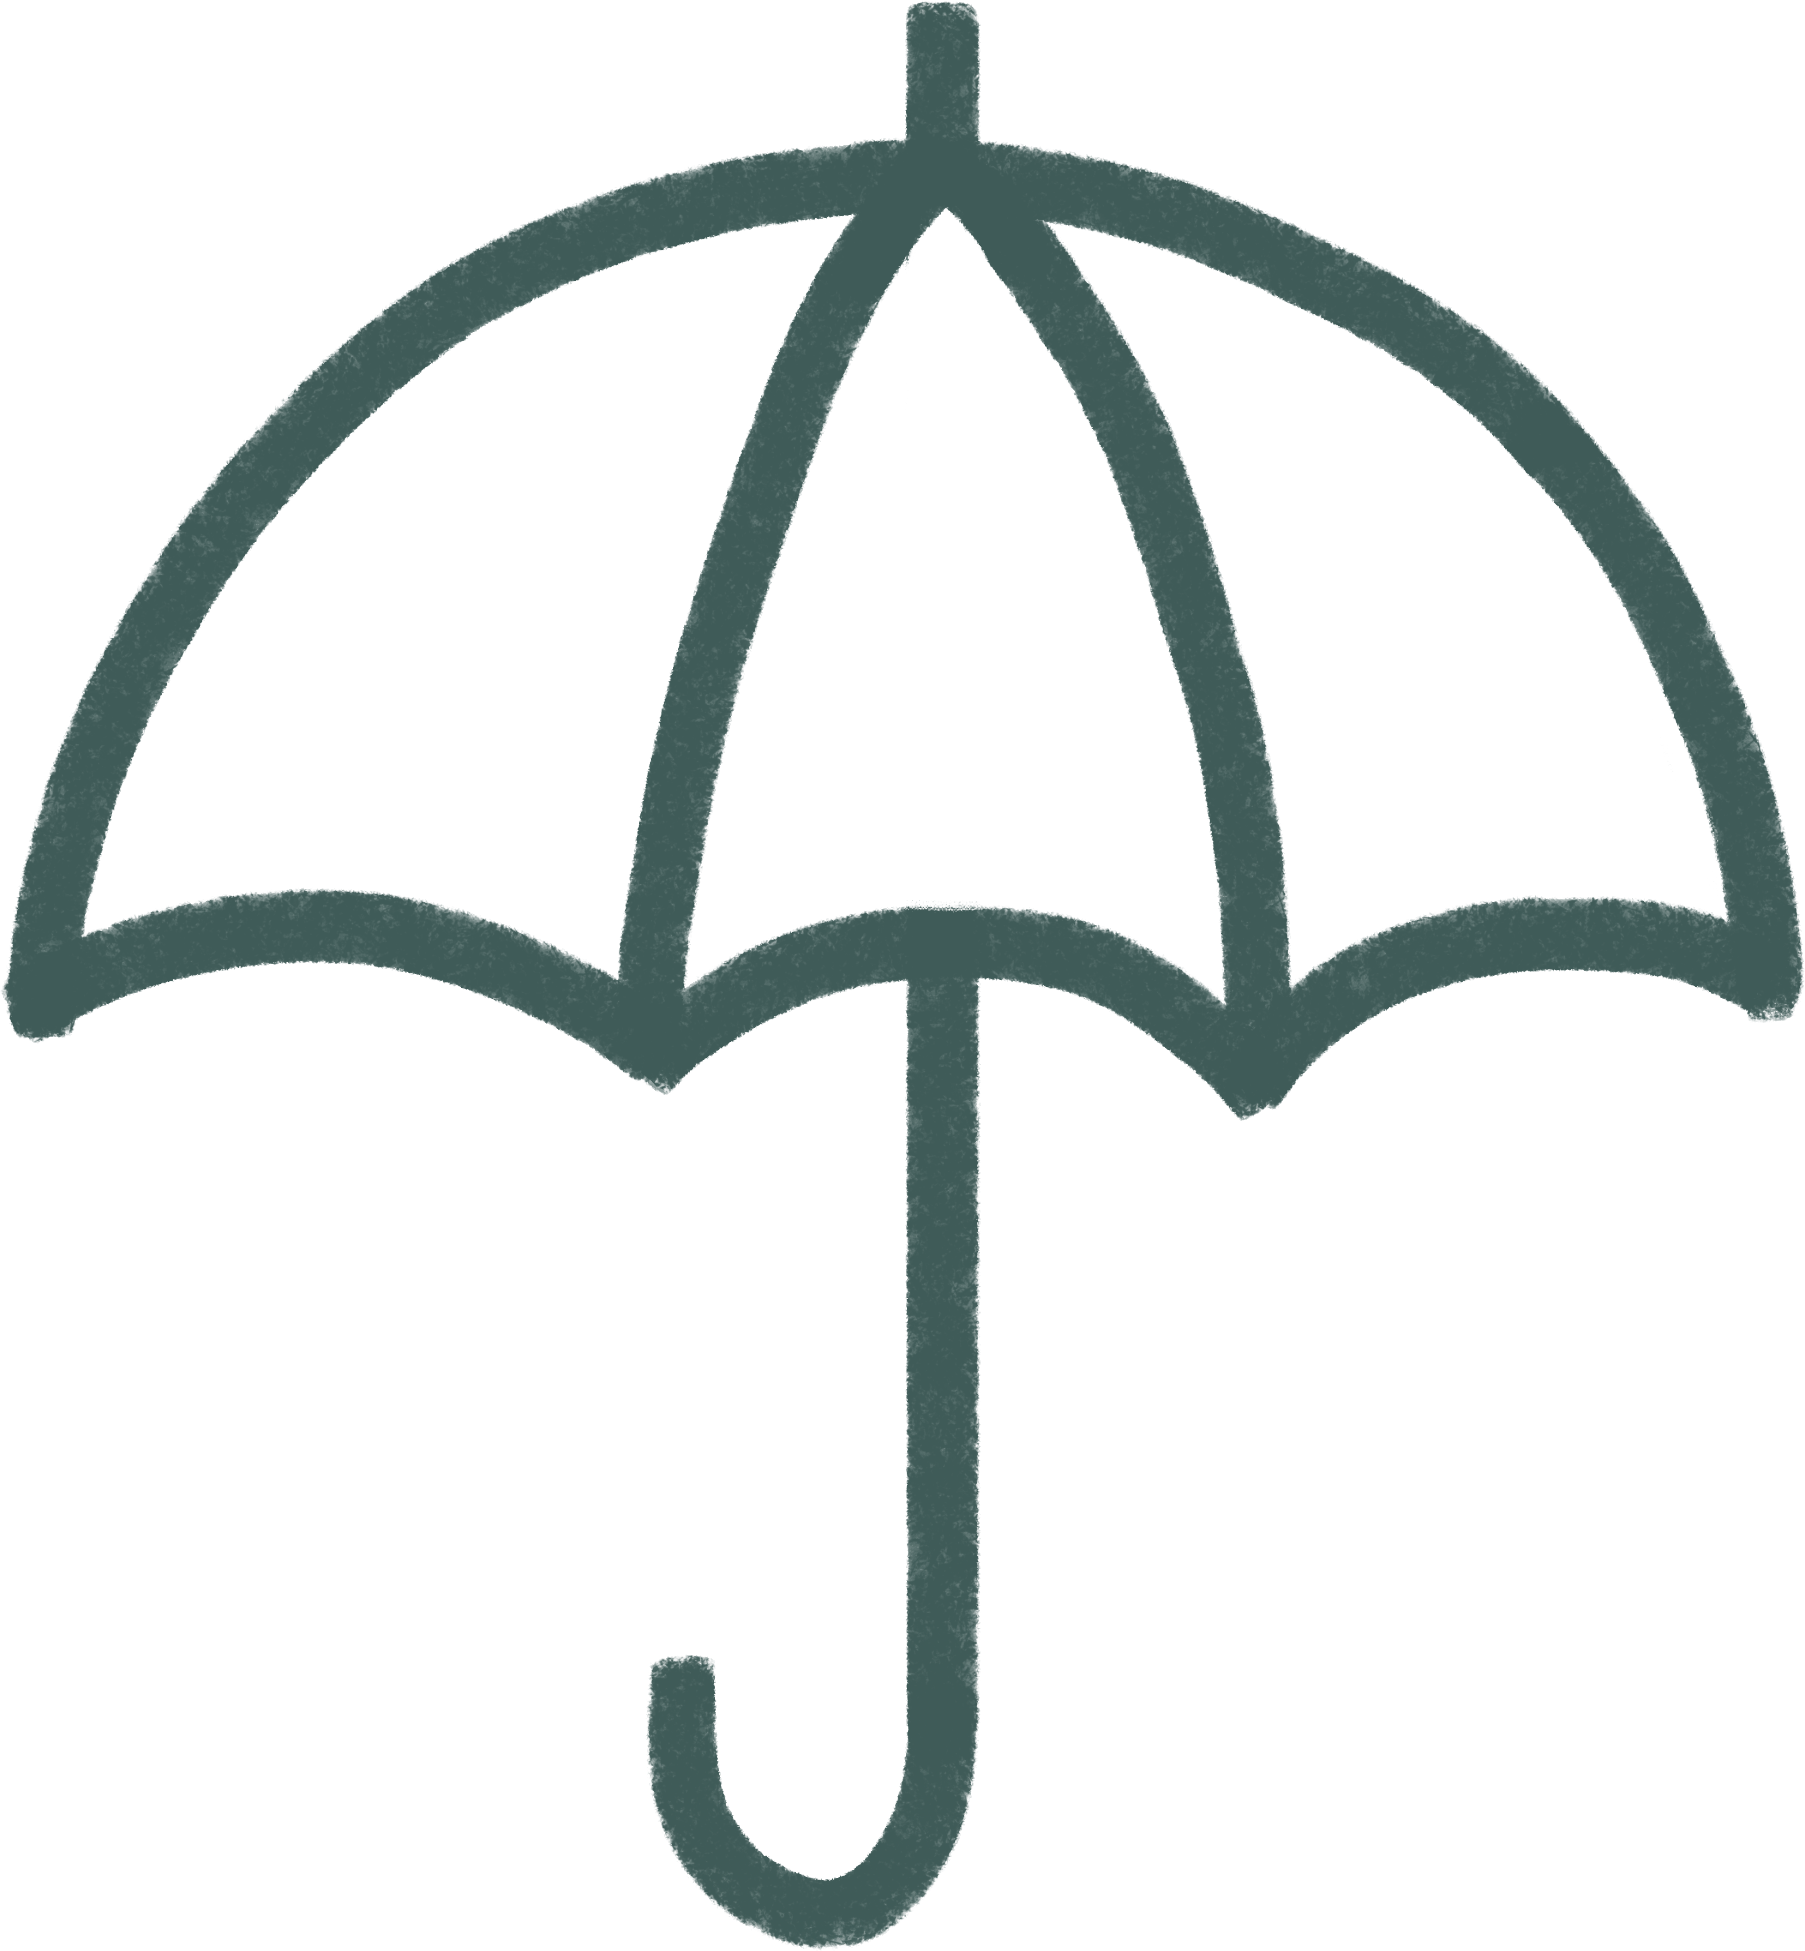 Redwoods Group - Umbrella